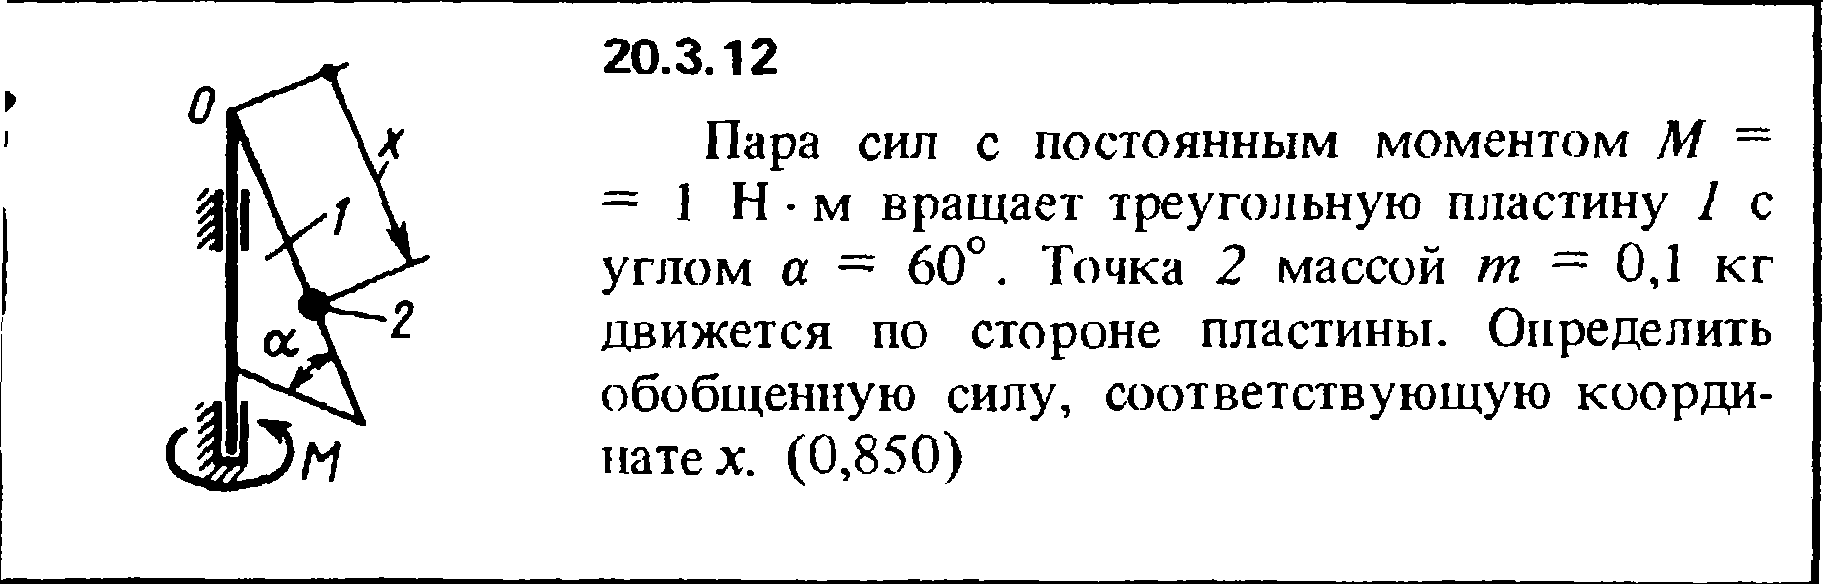 Решение 20.3.12 из сборника (решебника) Кепе О.Е. 1989